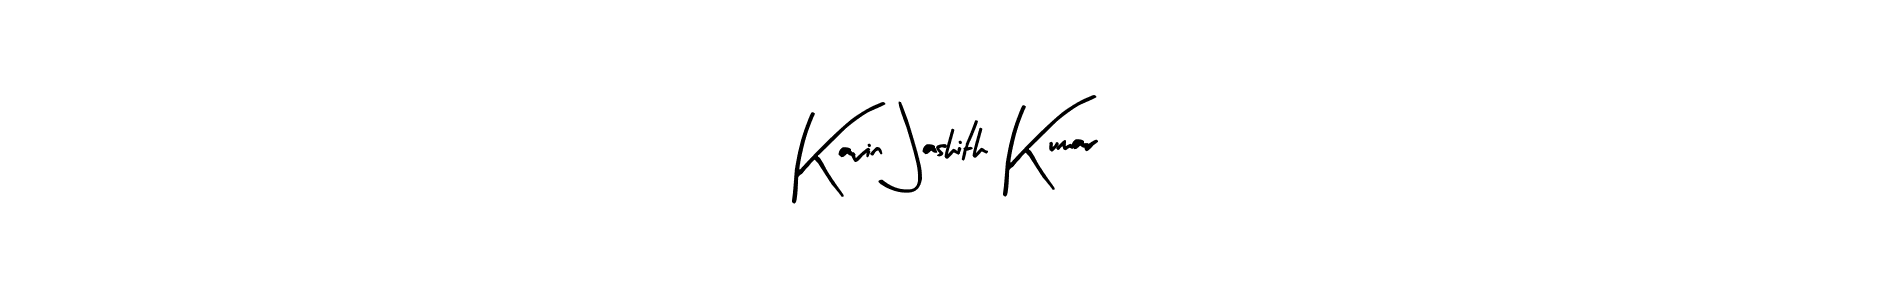 How to Draw Kavin Jashith Kumar signature style? Arty Signature is a latest design signature styles for name Kavin Jashith Kumar. Kavin Jashith Kumar signature style 8 images and pictures png